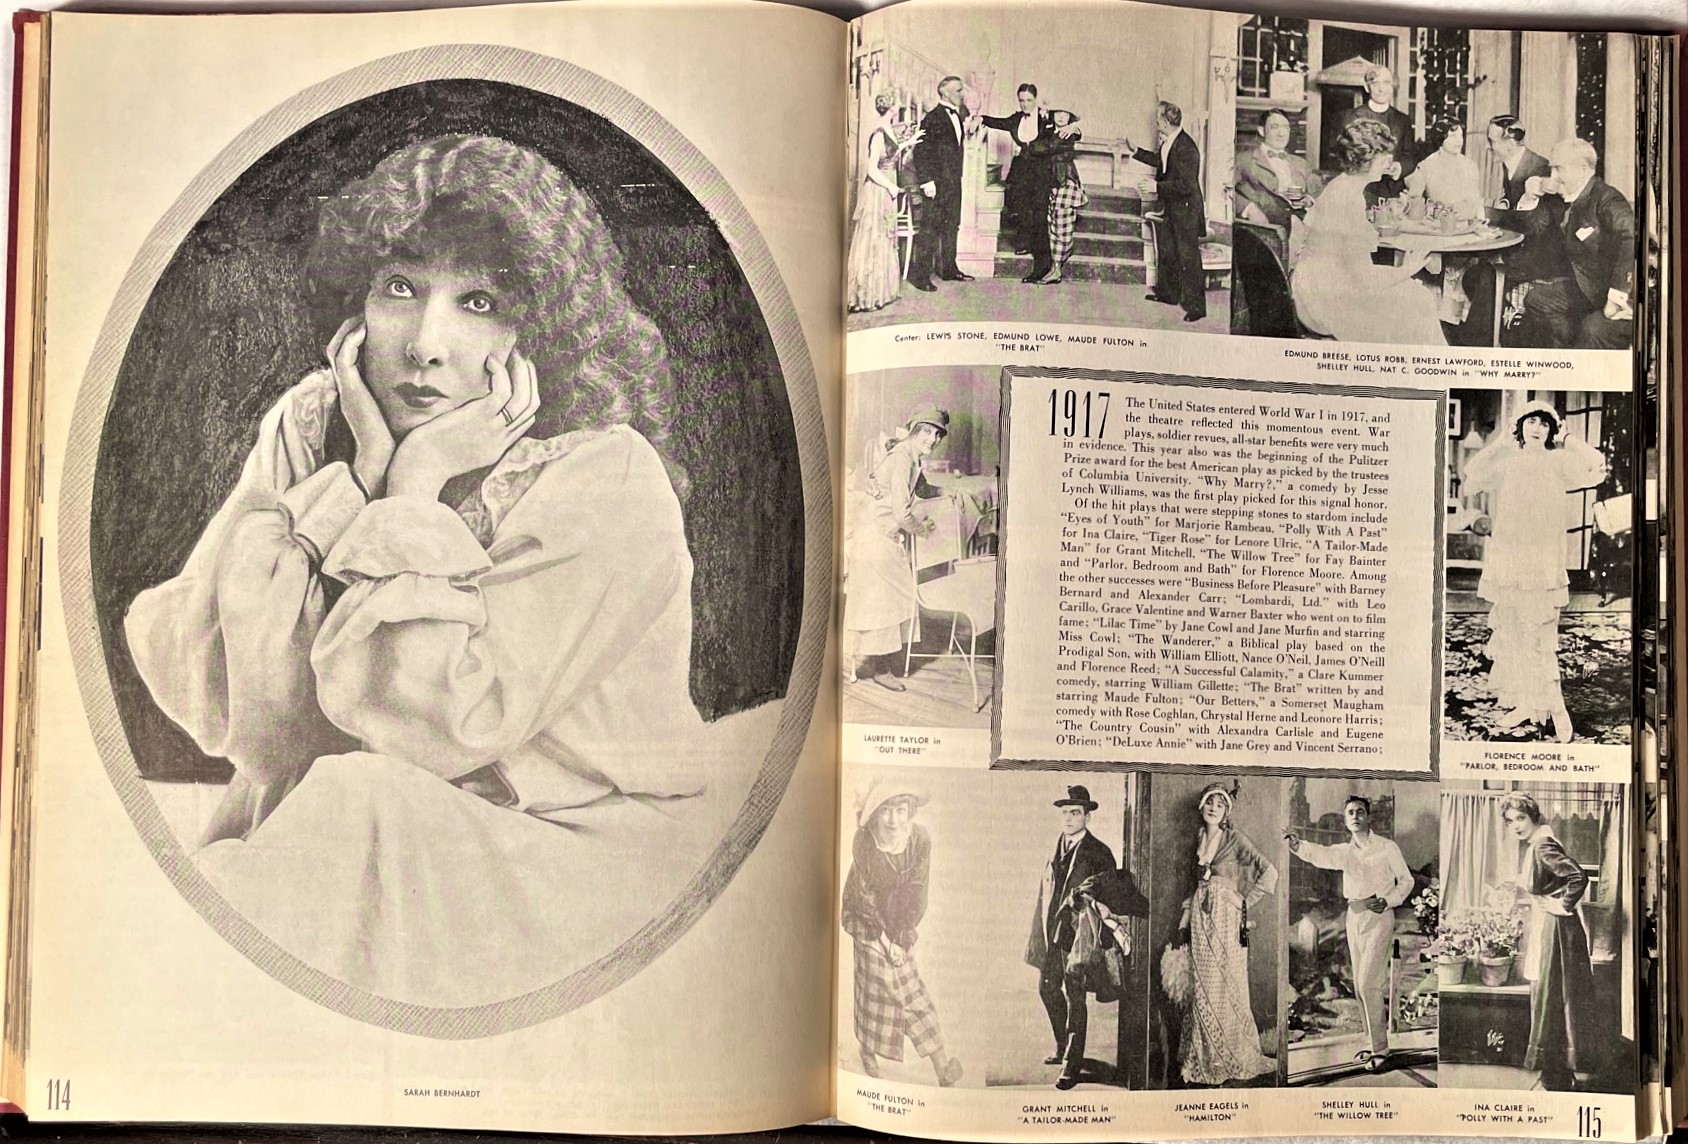 BLUM, DANIEL - A Pictorial History of the American Theatre: 1900-1950